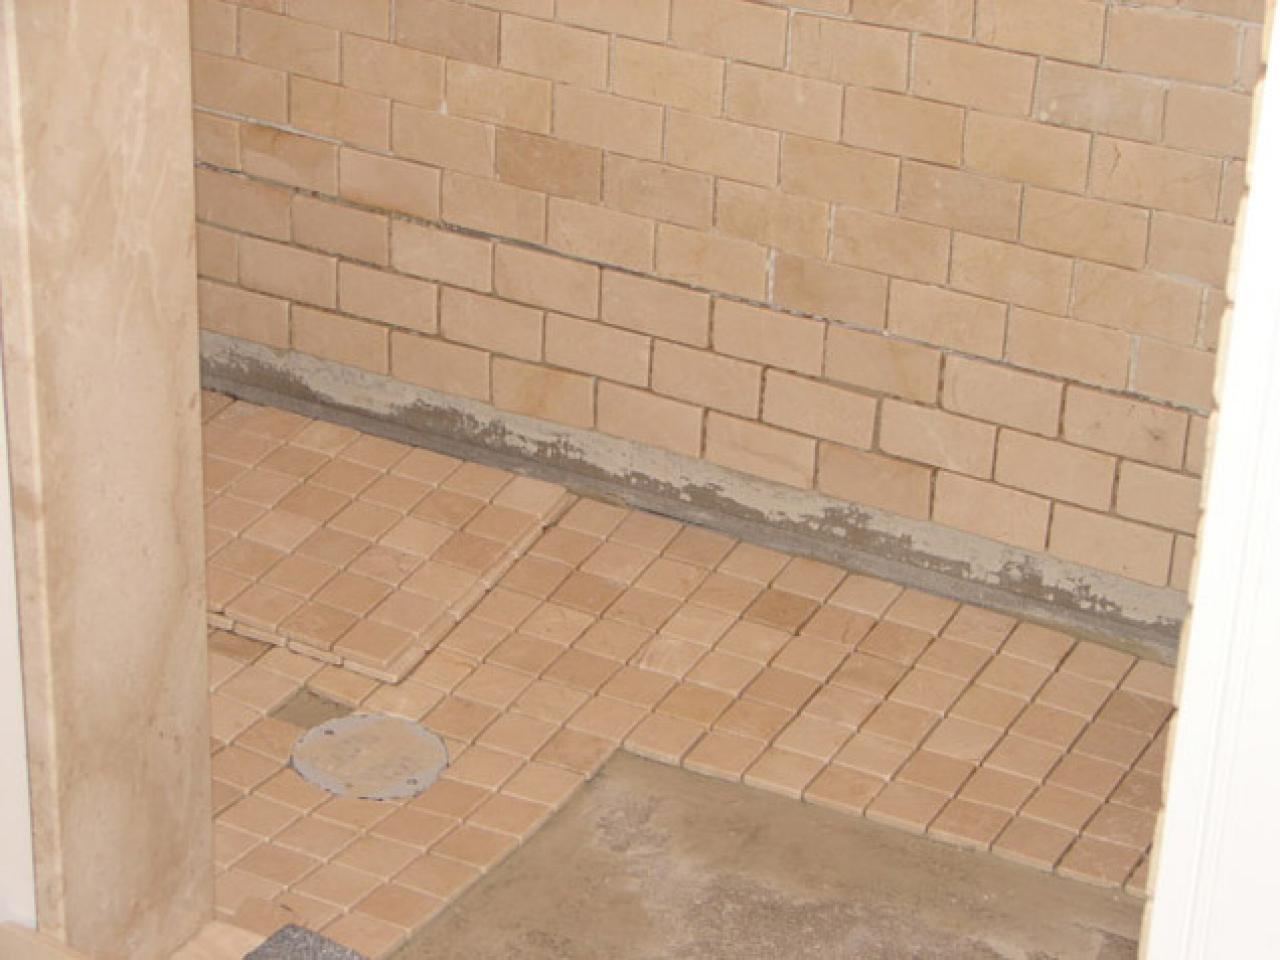 To Install Tile In A Bathroom Shower, Tiled Bathroom Floors